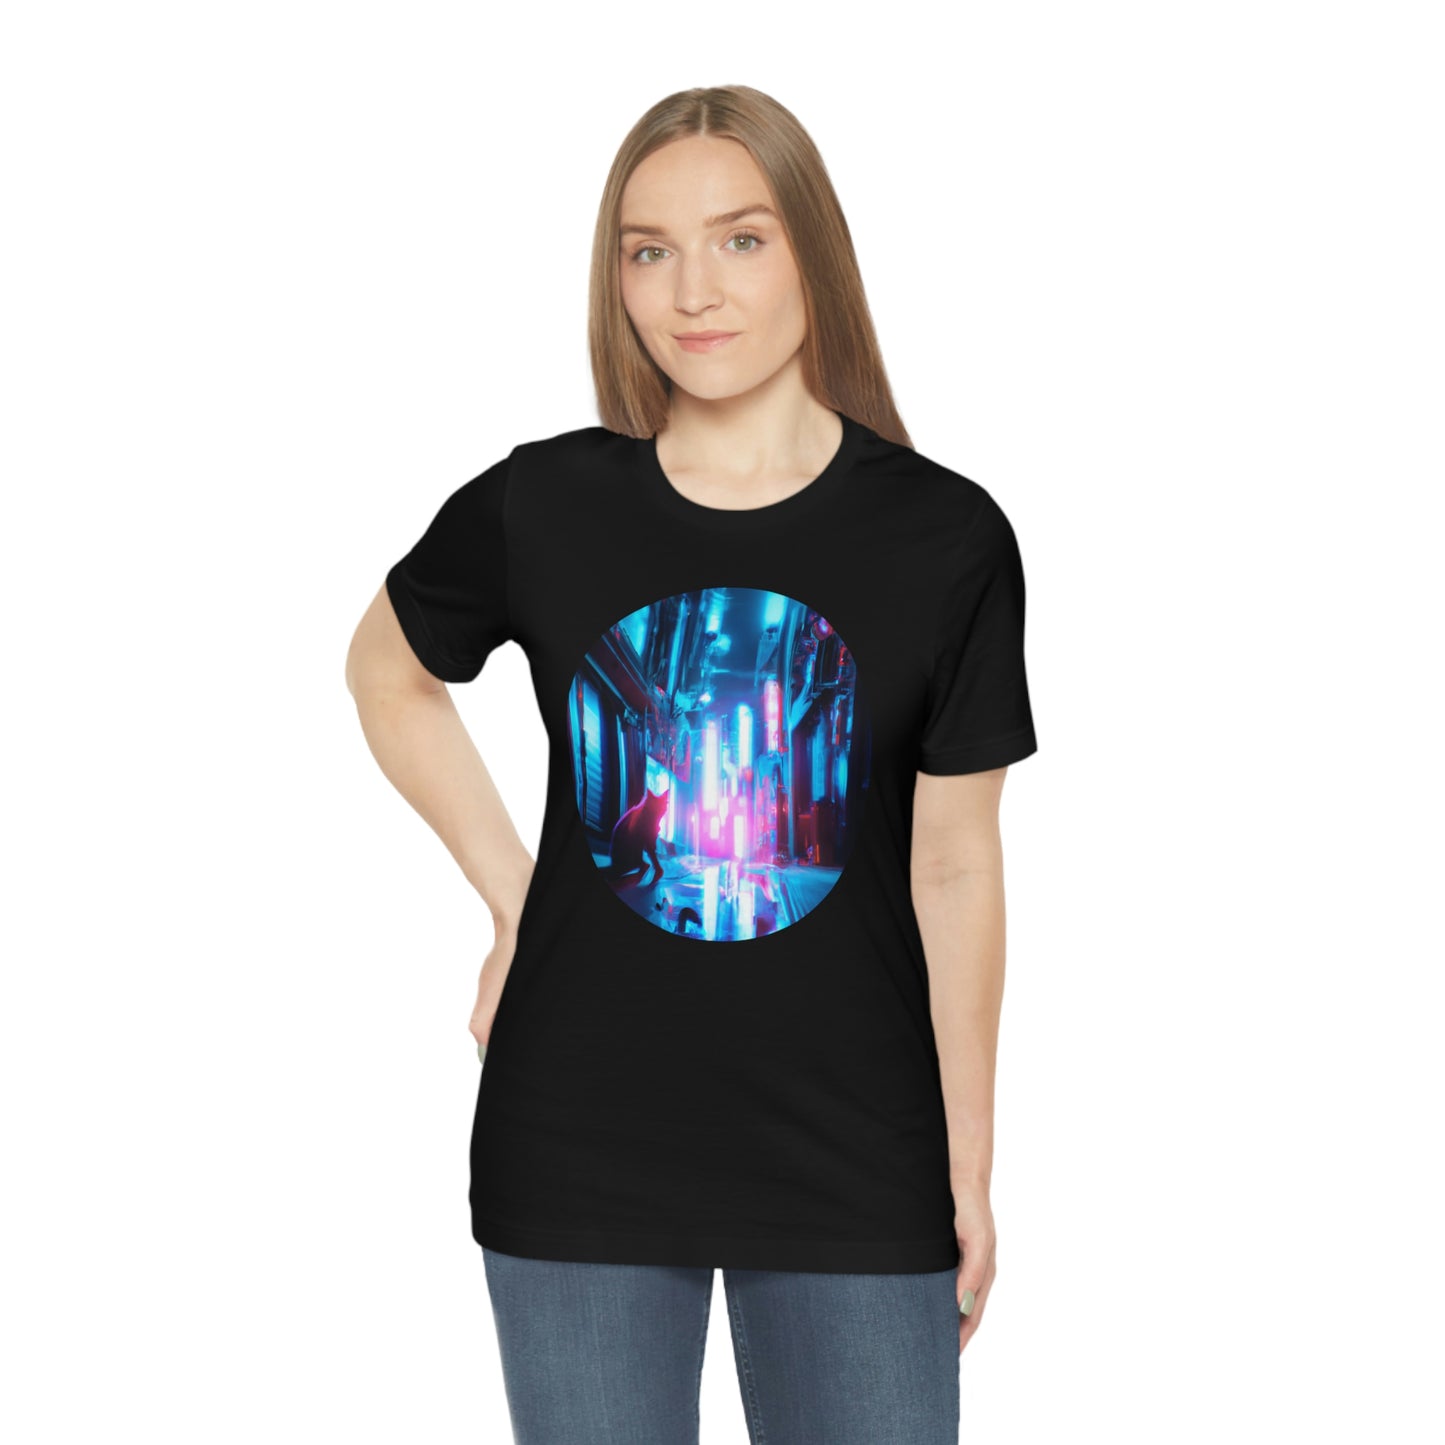 Stray inspired Cyberpunk Cat Shirt